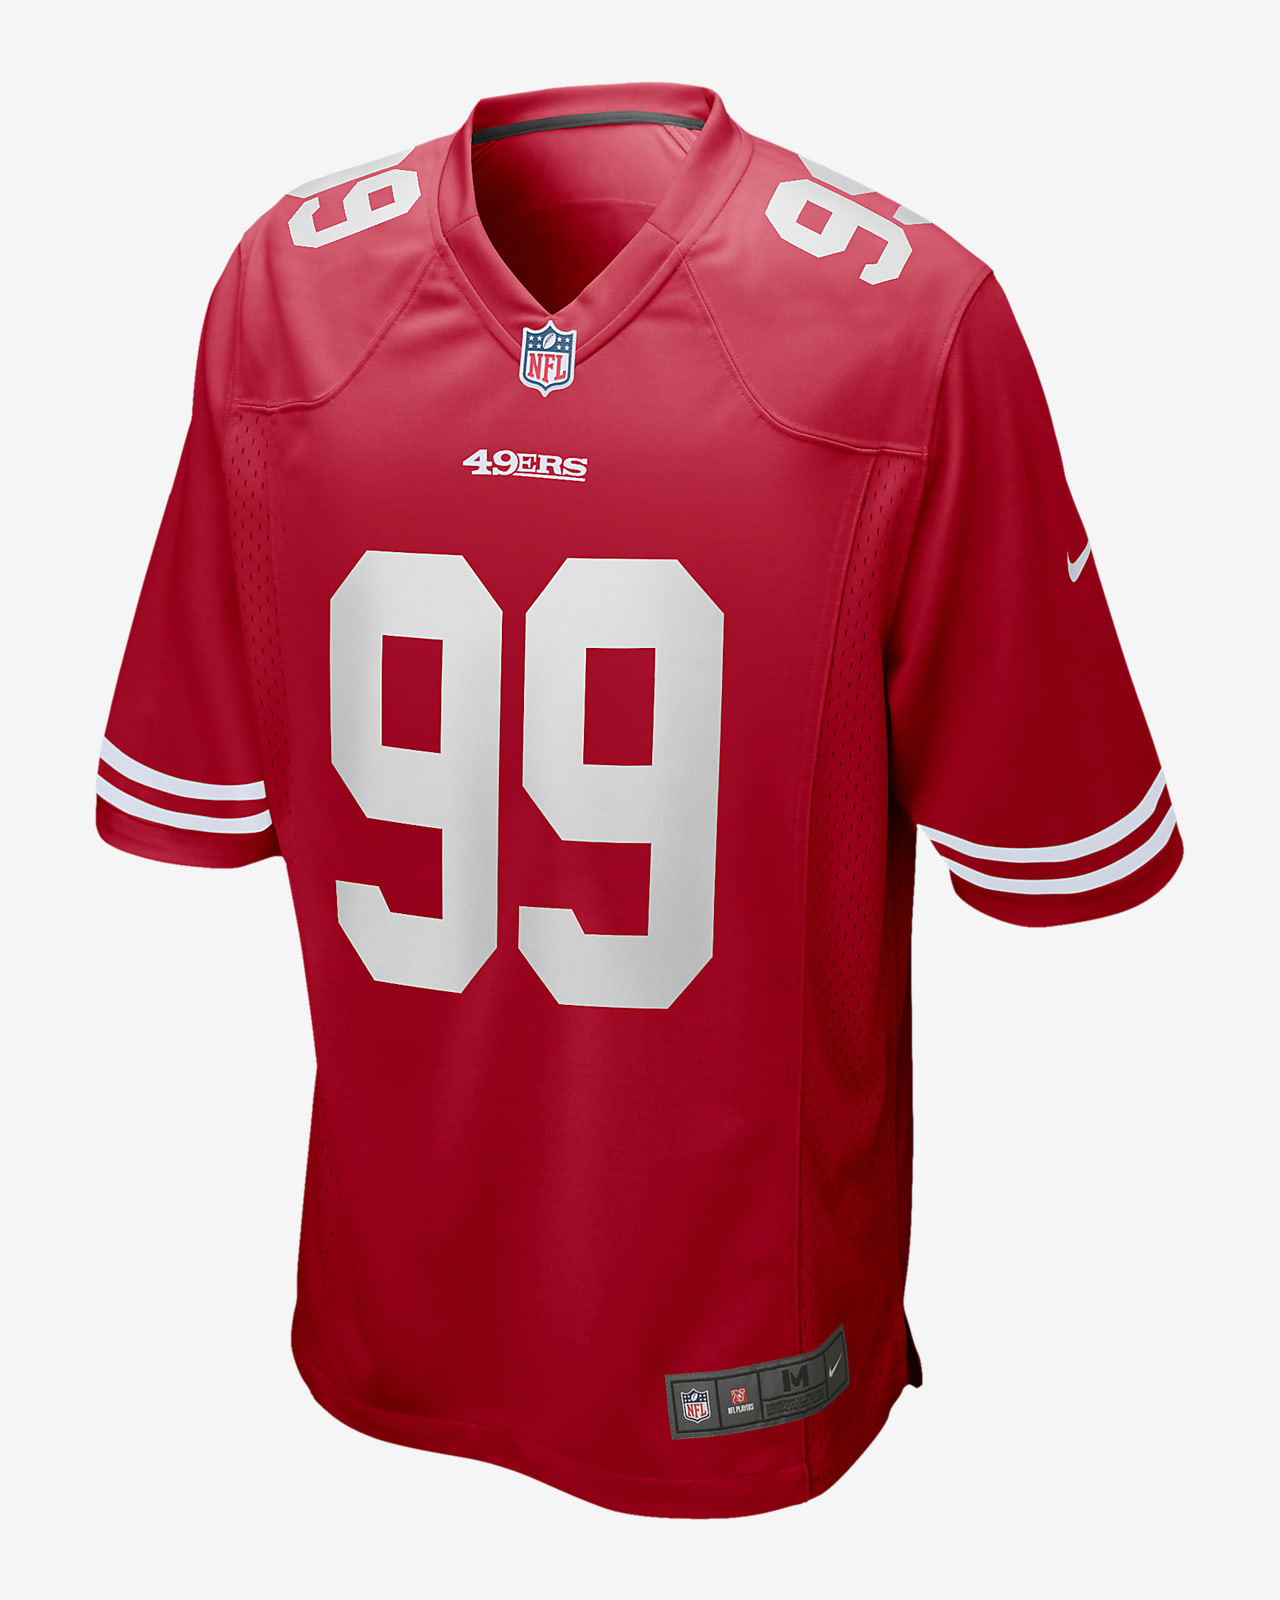 NFL San Francisco 49ers (Javon Kinlaw) Men's Game Football Jersey.